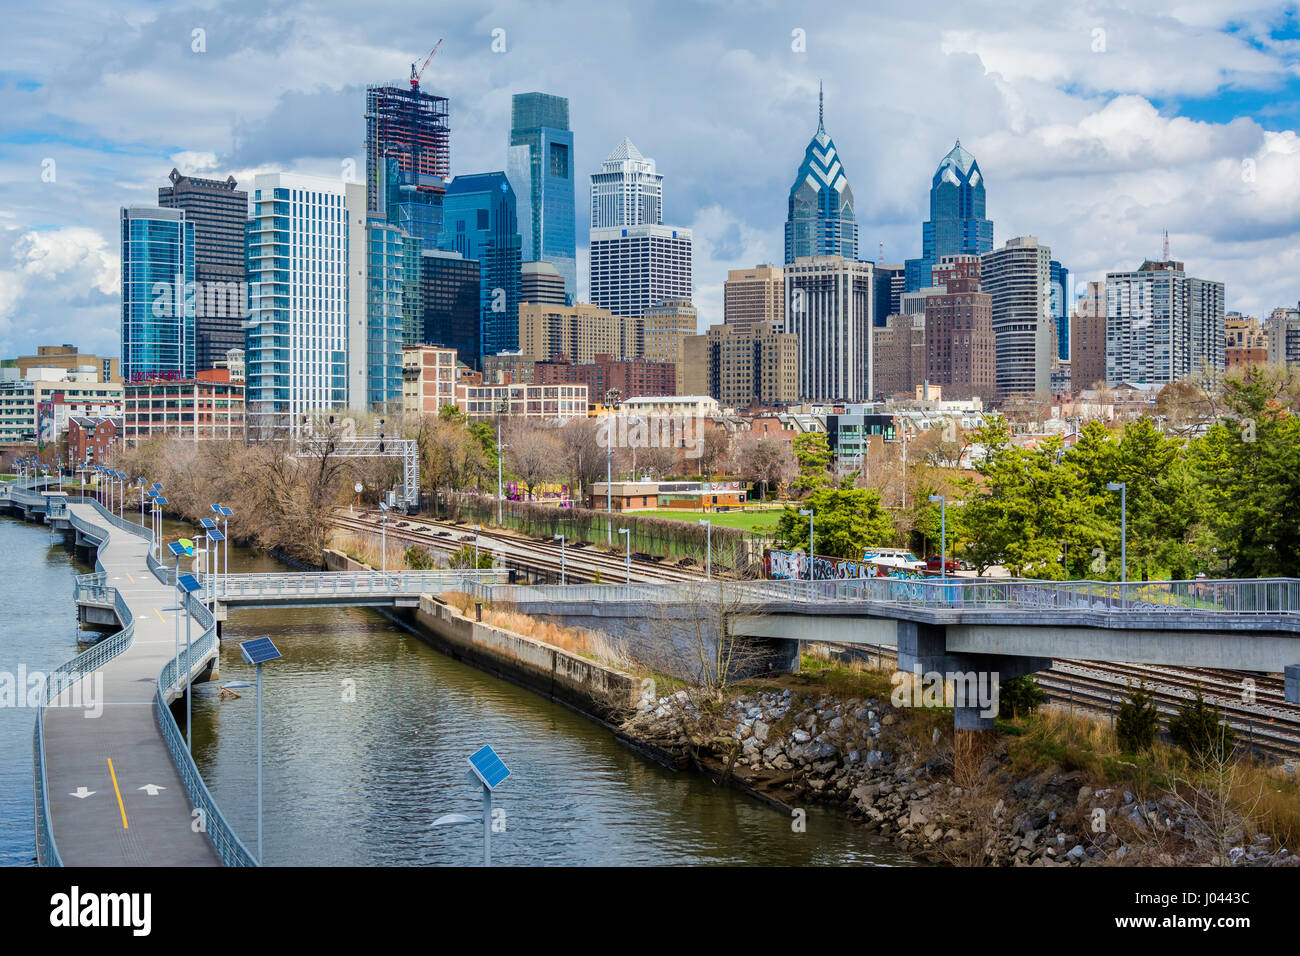 The Schuylkill River and skyline seen from the South Street Bridge, in Philadelphia, Pennsylvania. Stock Photo